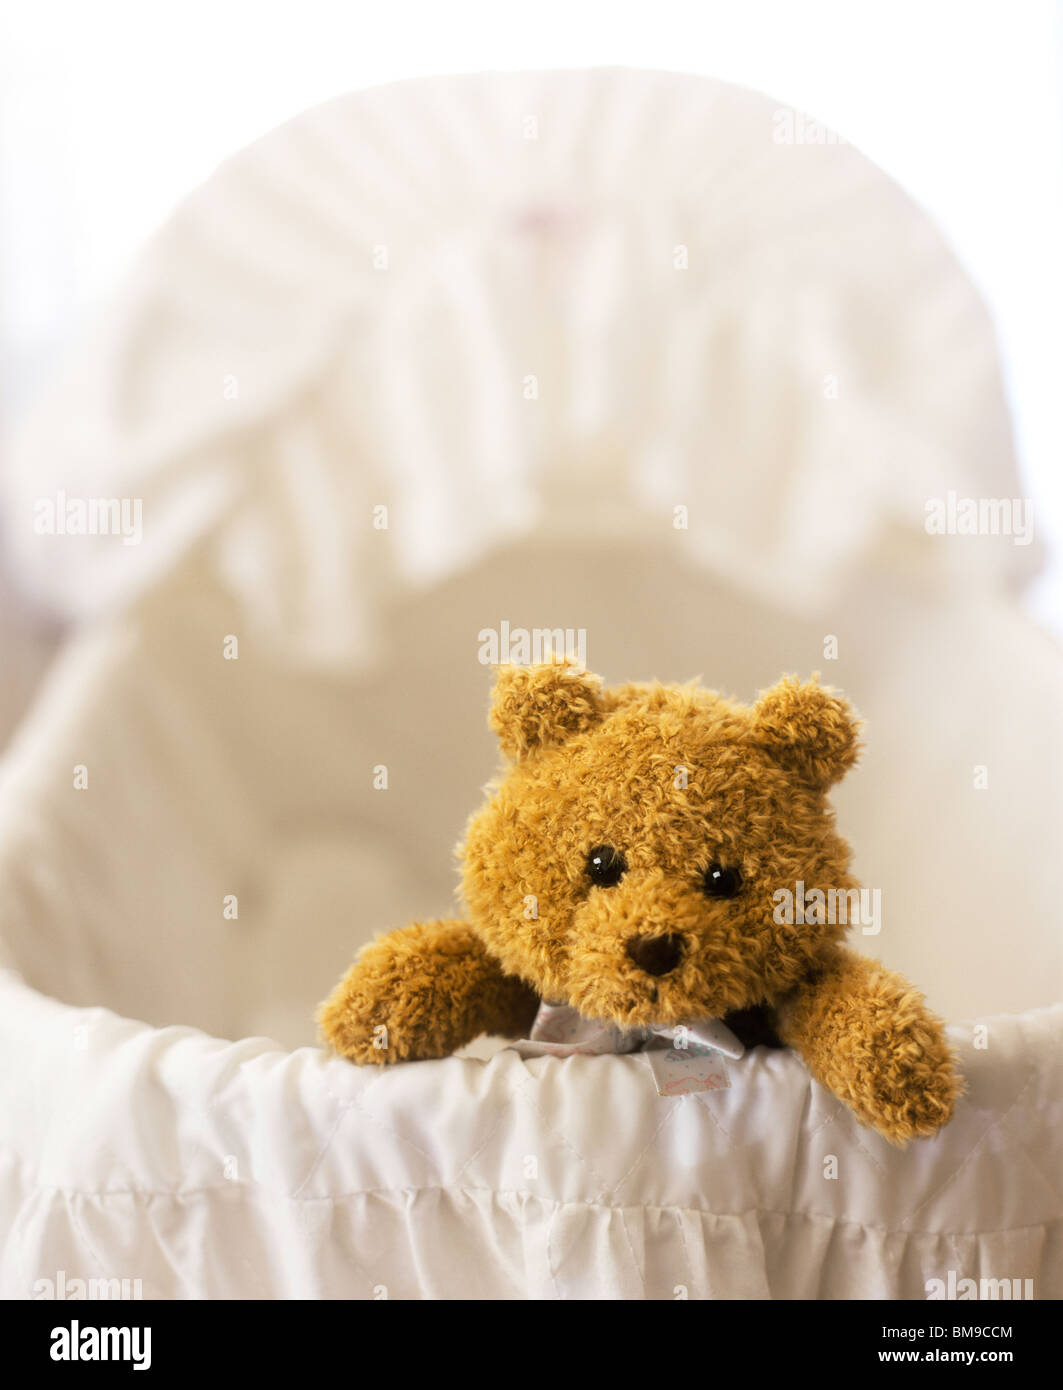 Studio shot of a Stuffed Teddy bear in a Baby Bassinet Stock Photo